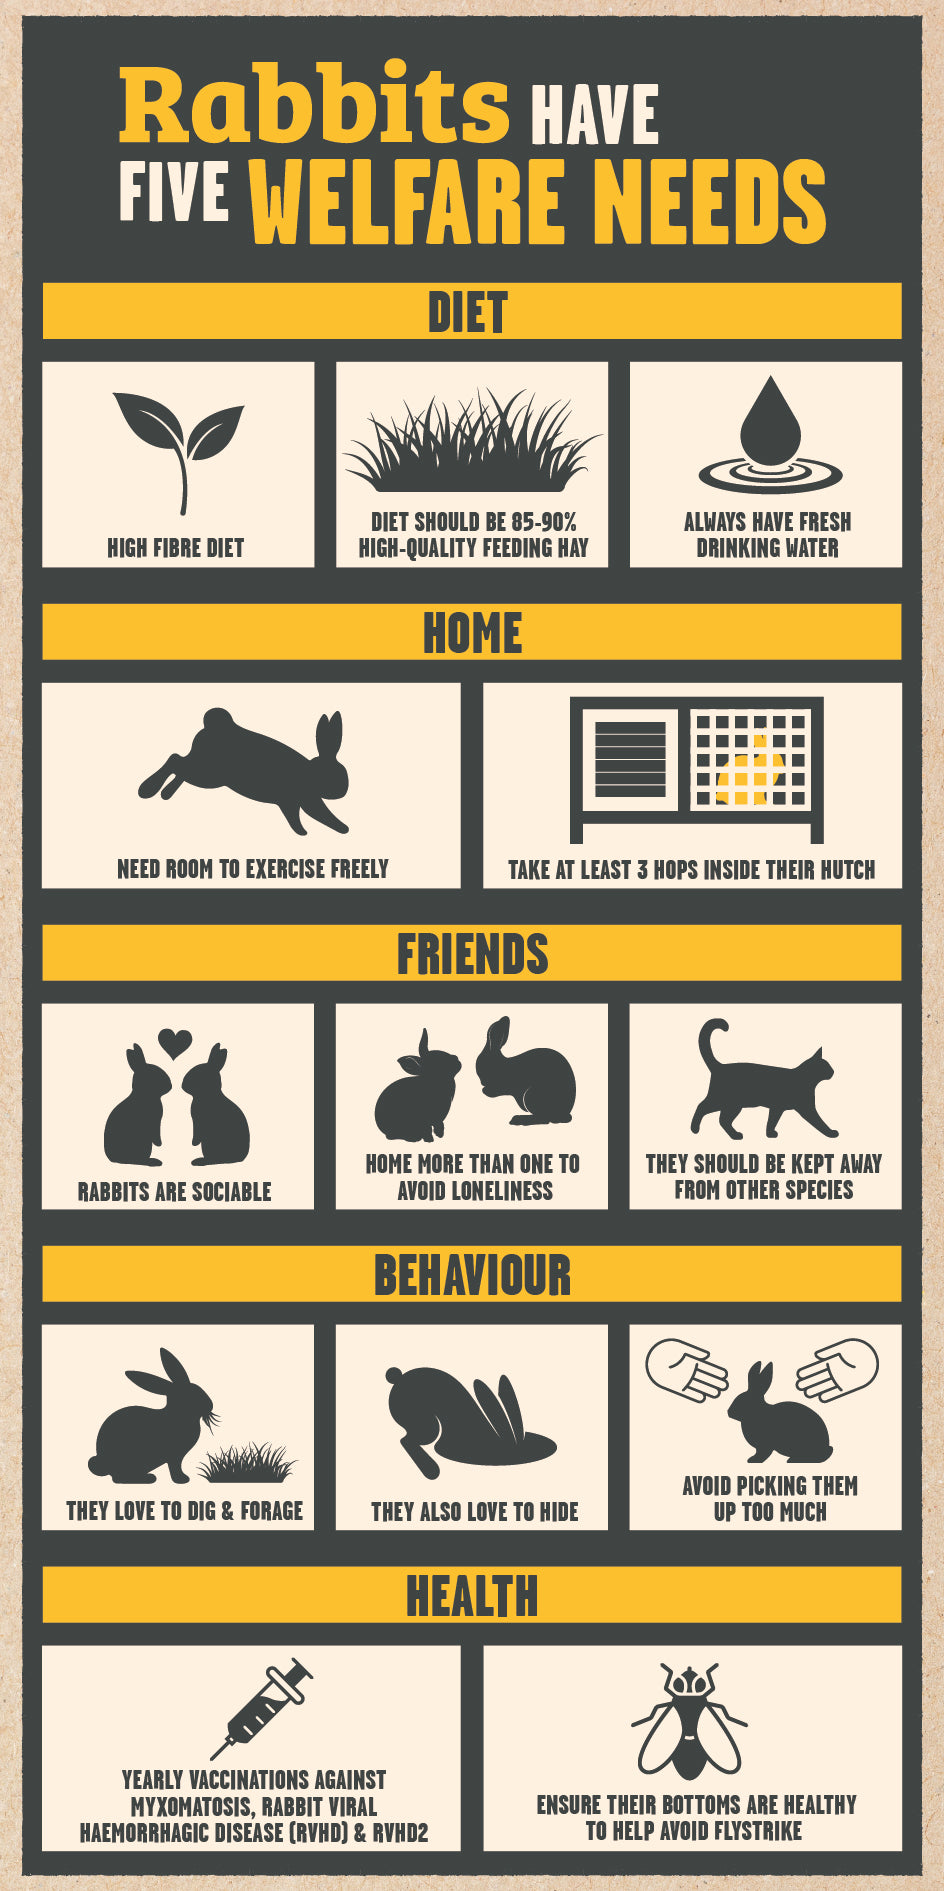 rabbit welfare needs infographic